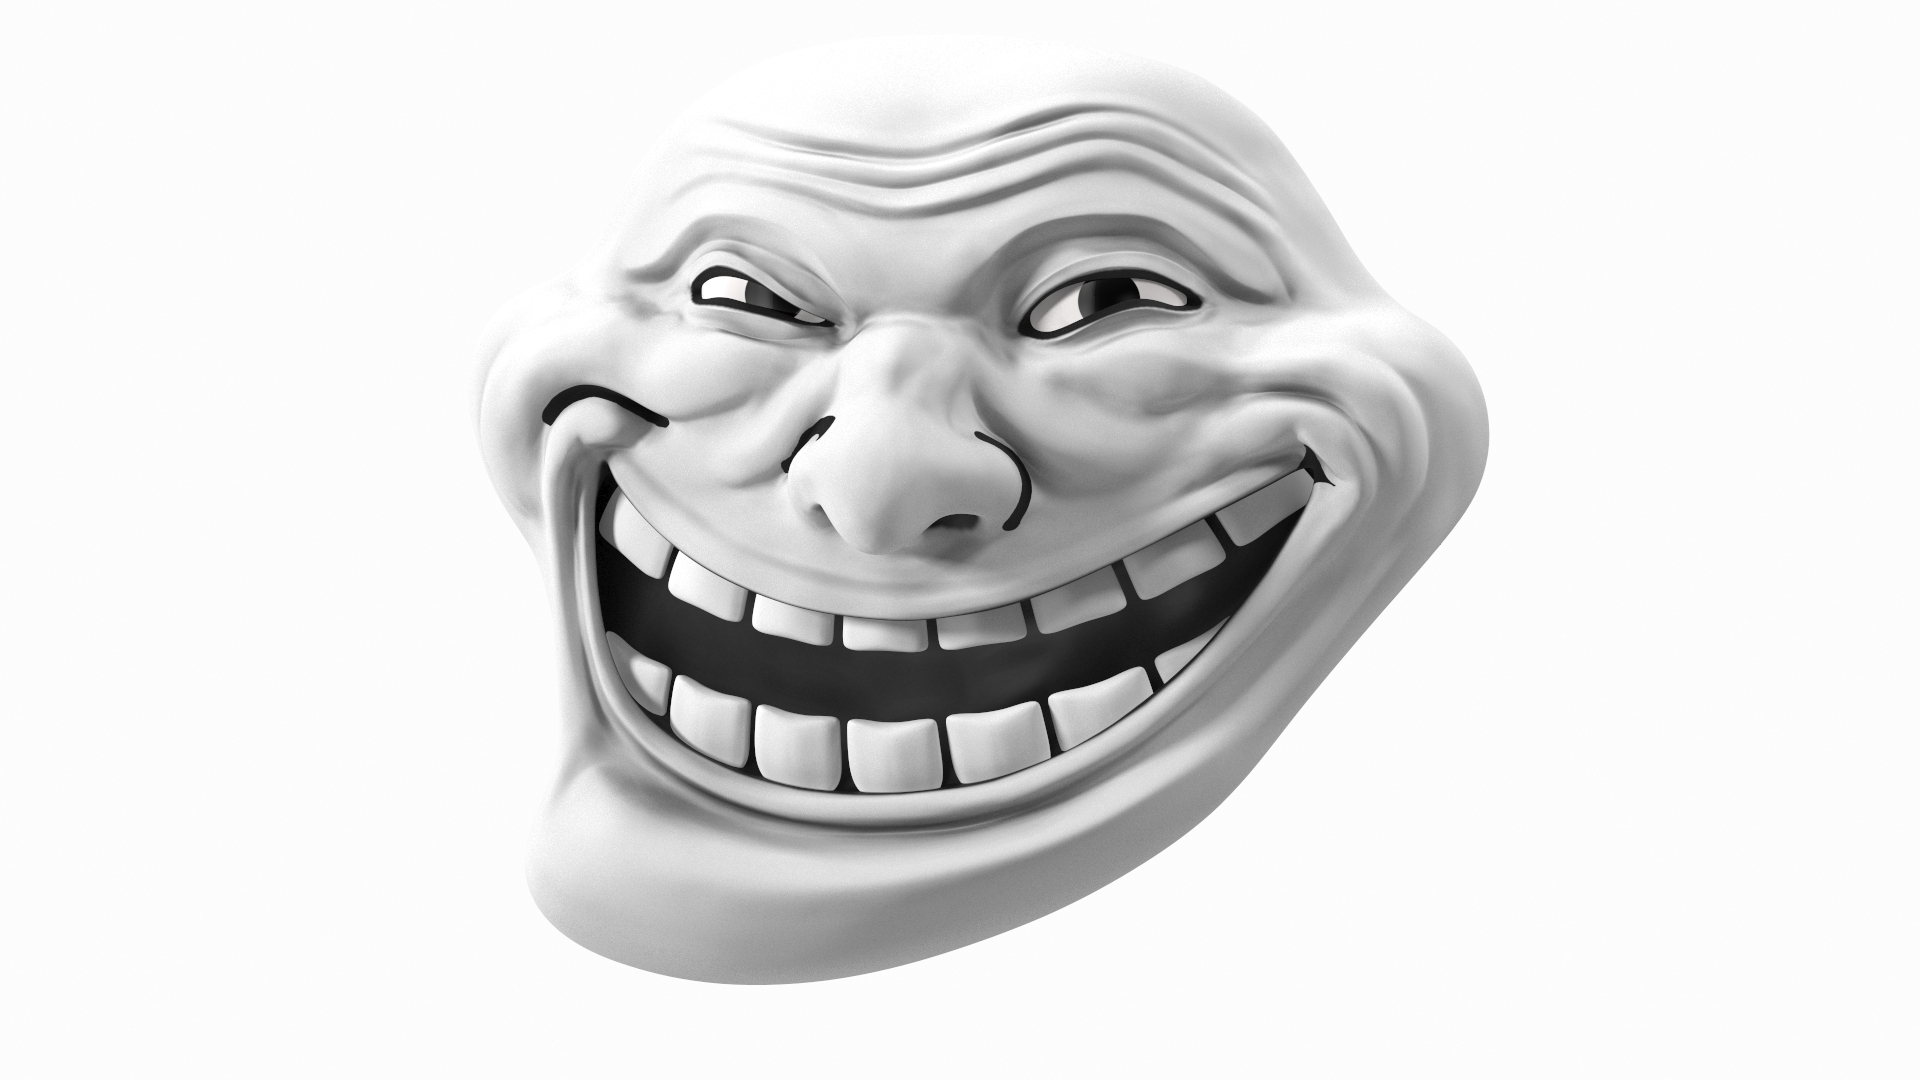 Custom Troll Face Meme Flash Drive